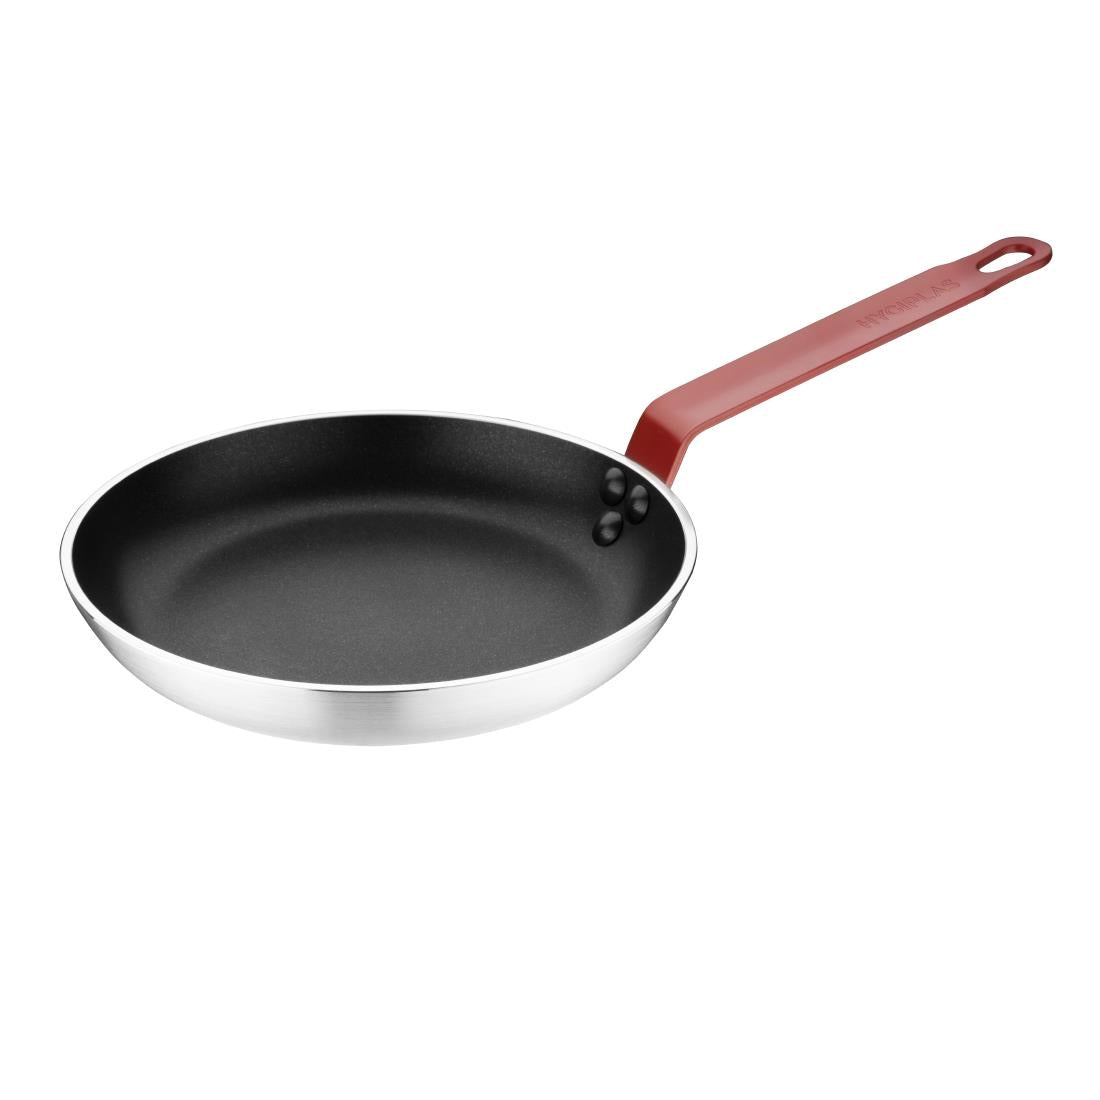 Hygiplas Aluminium Non-Stick Teflon Platinum Plus Frying Pan with Red Handle 24cm